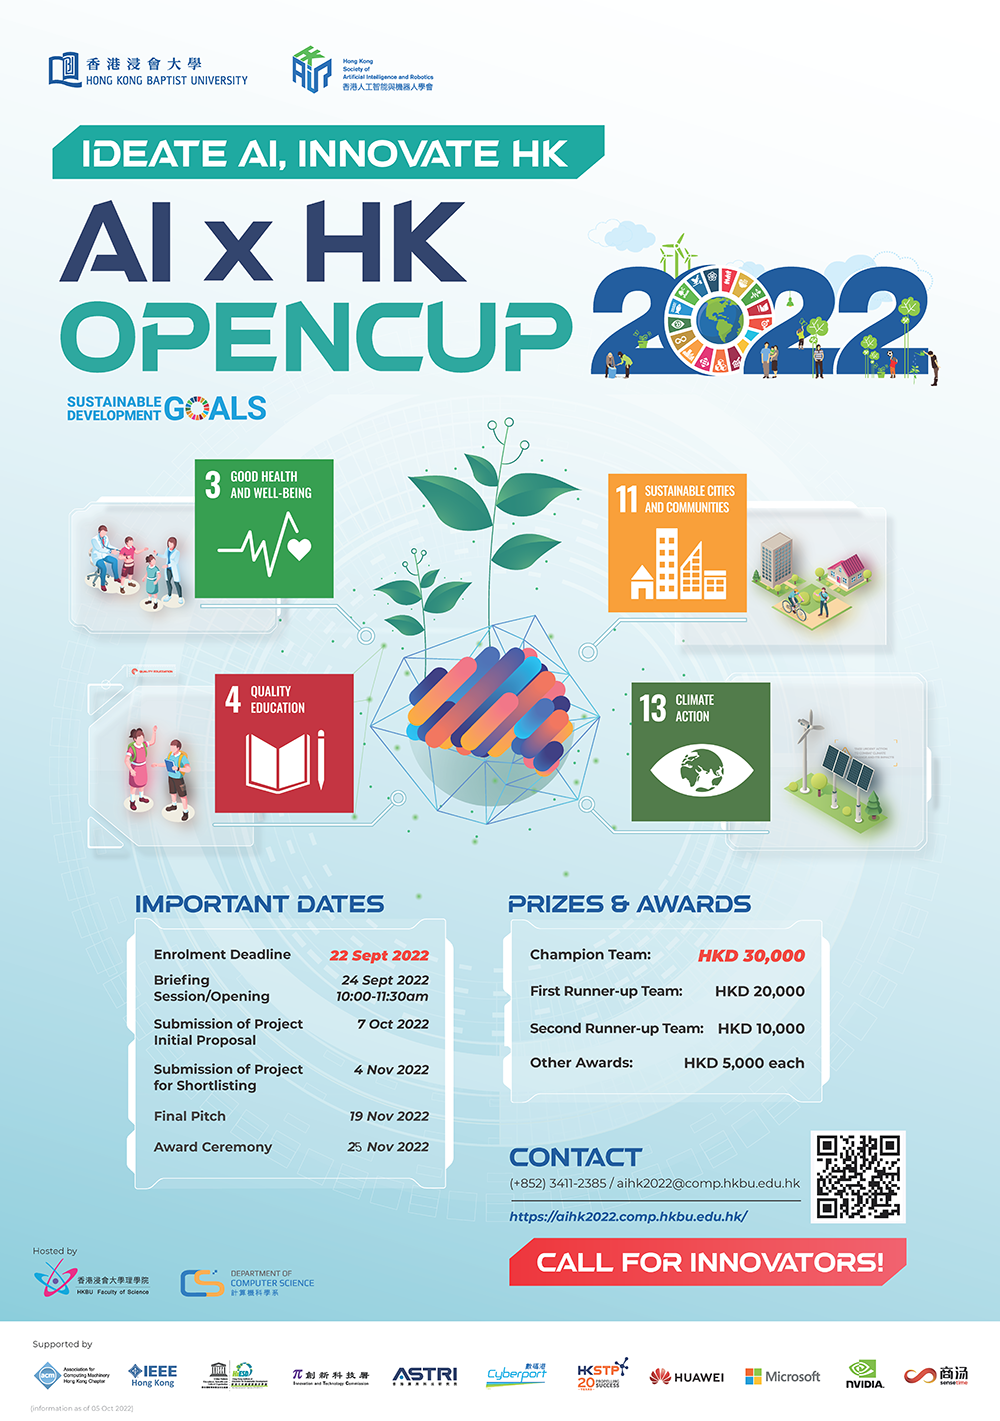 AIxHK OpenCup 2022